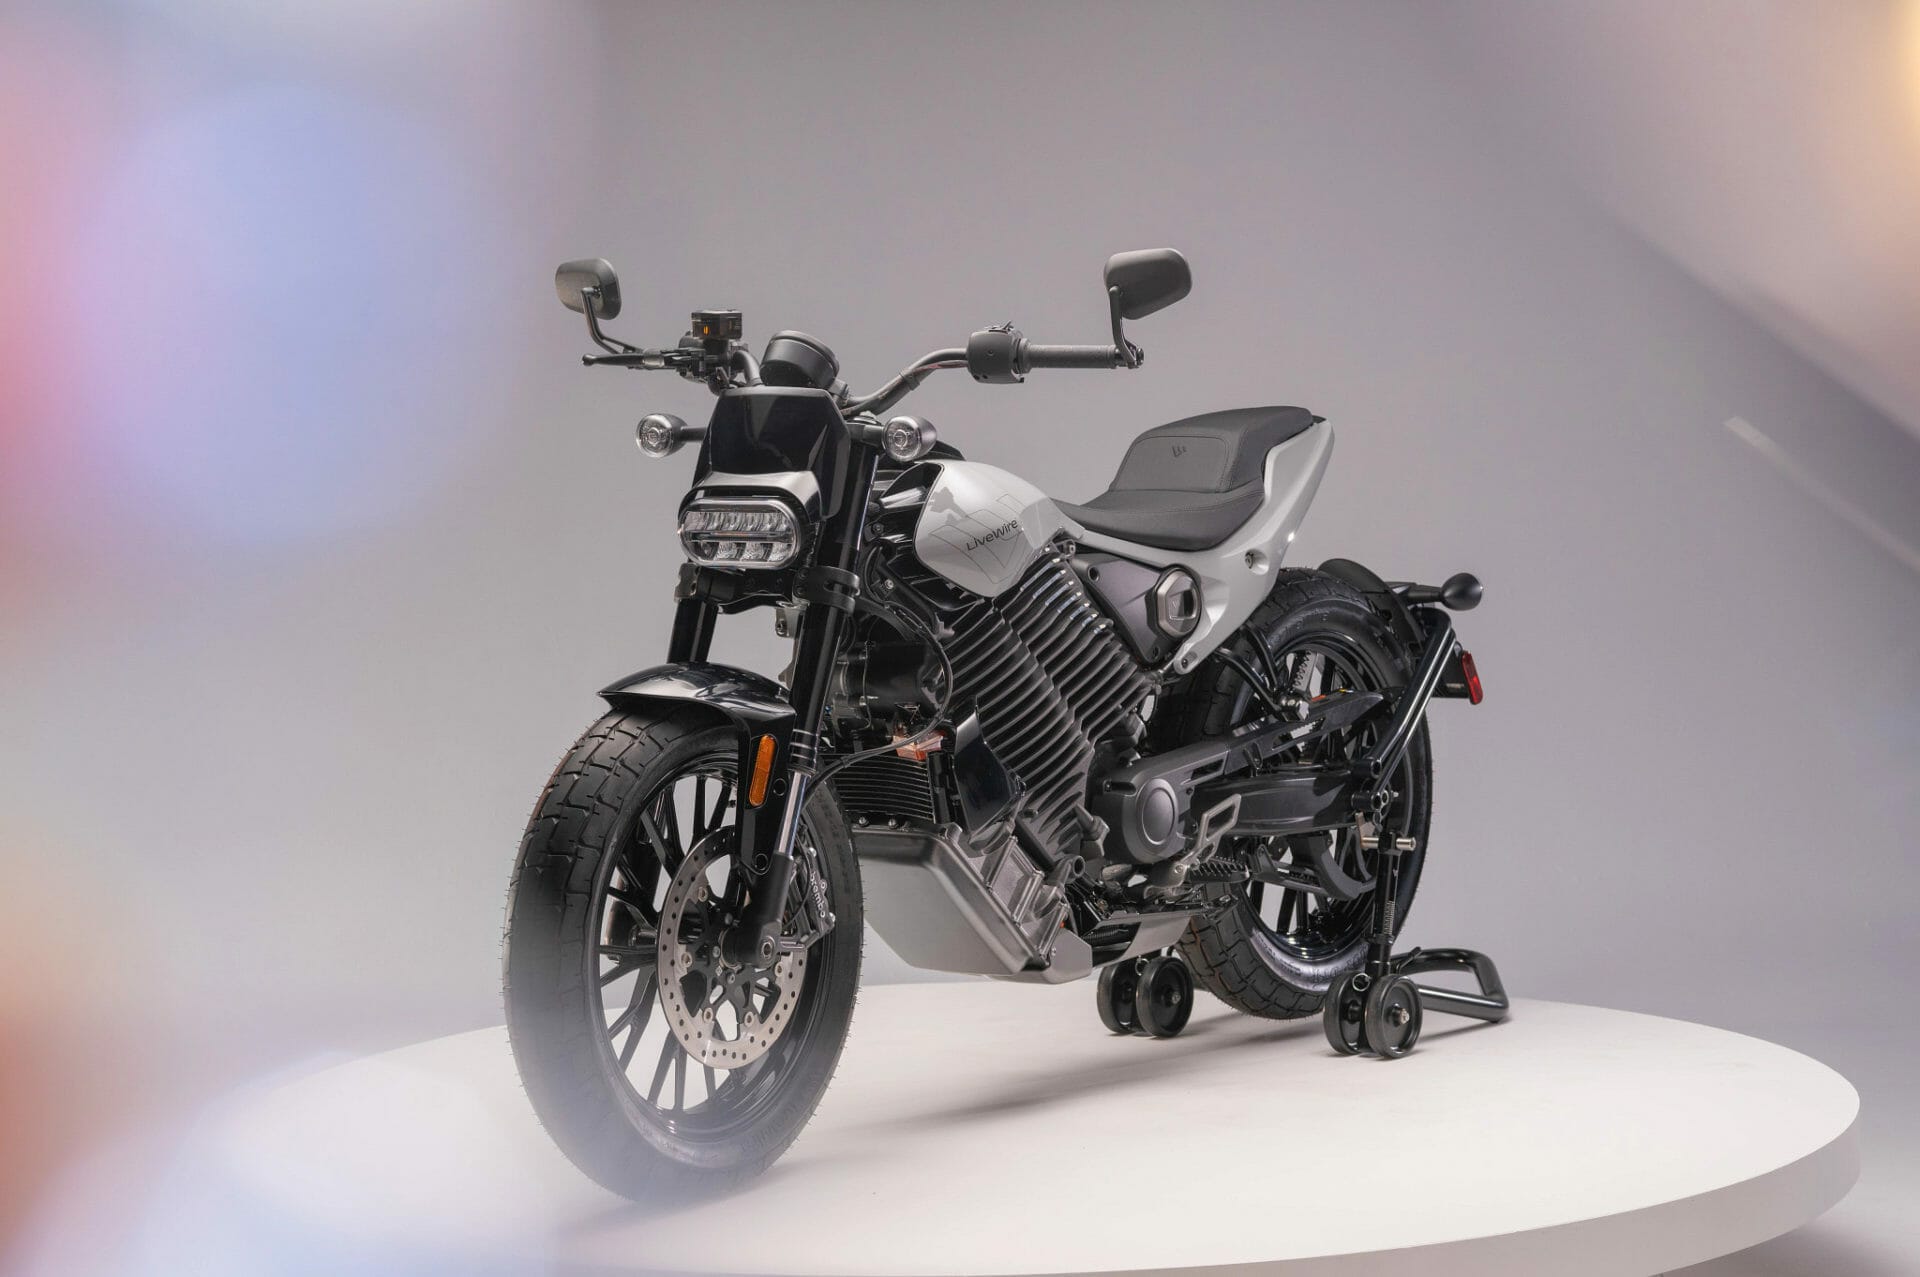 LiveWire Unveils S2 Del Mar Electric Motorcycle